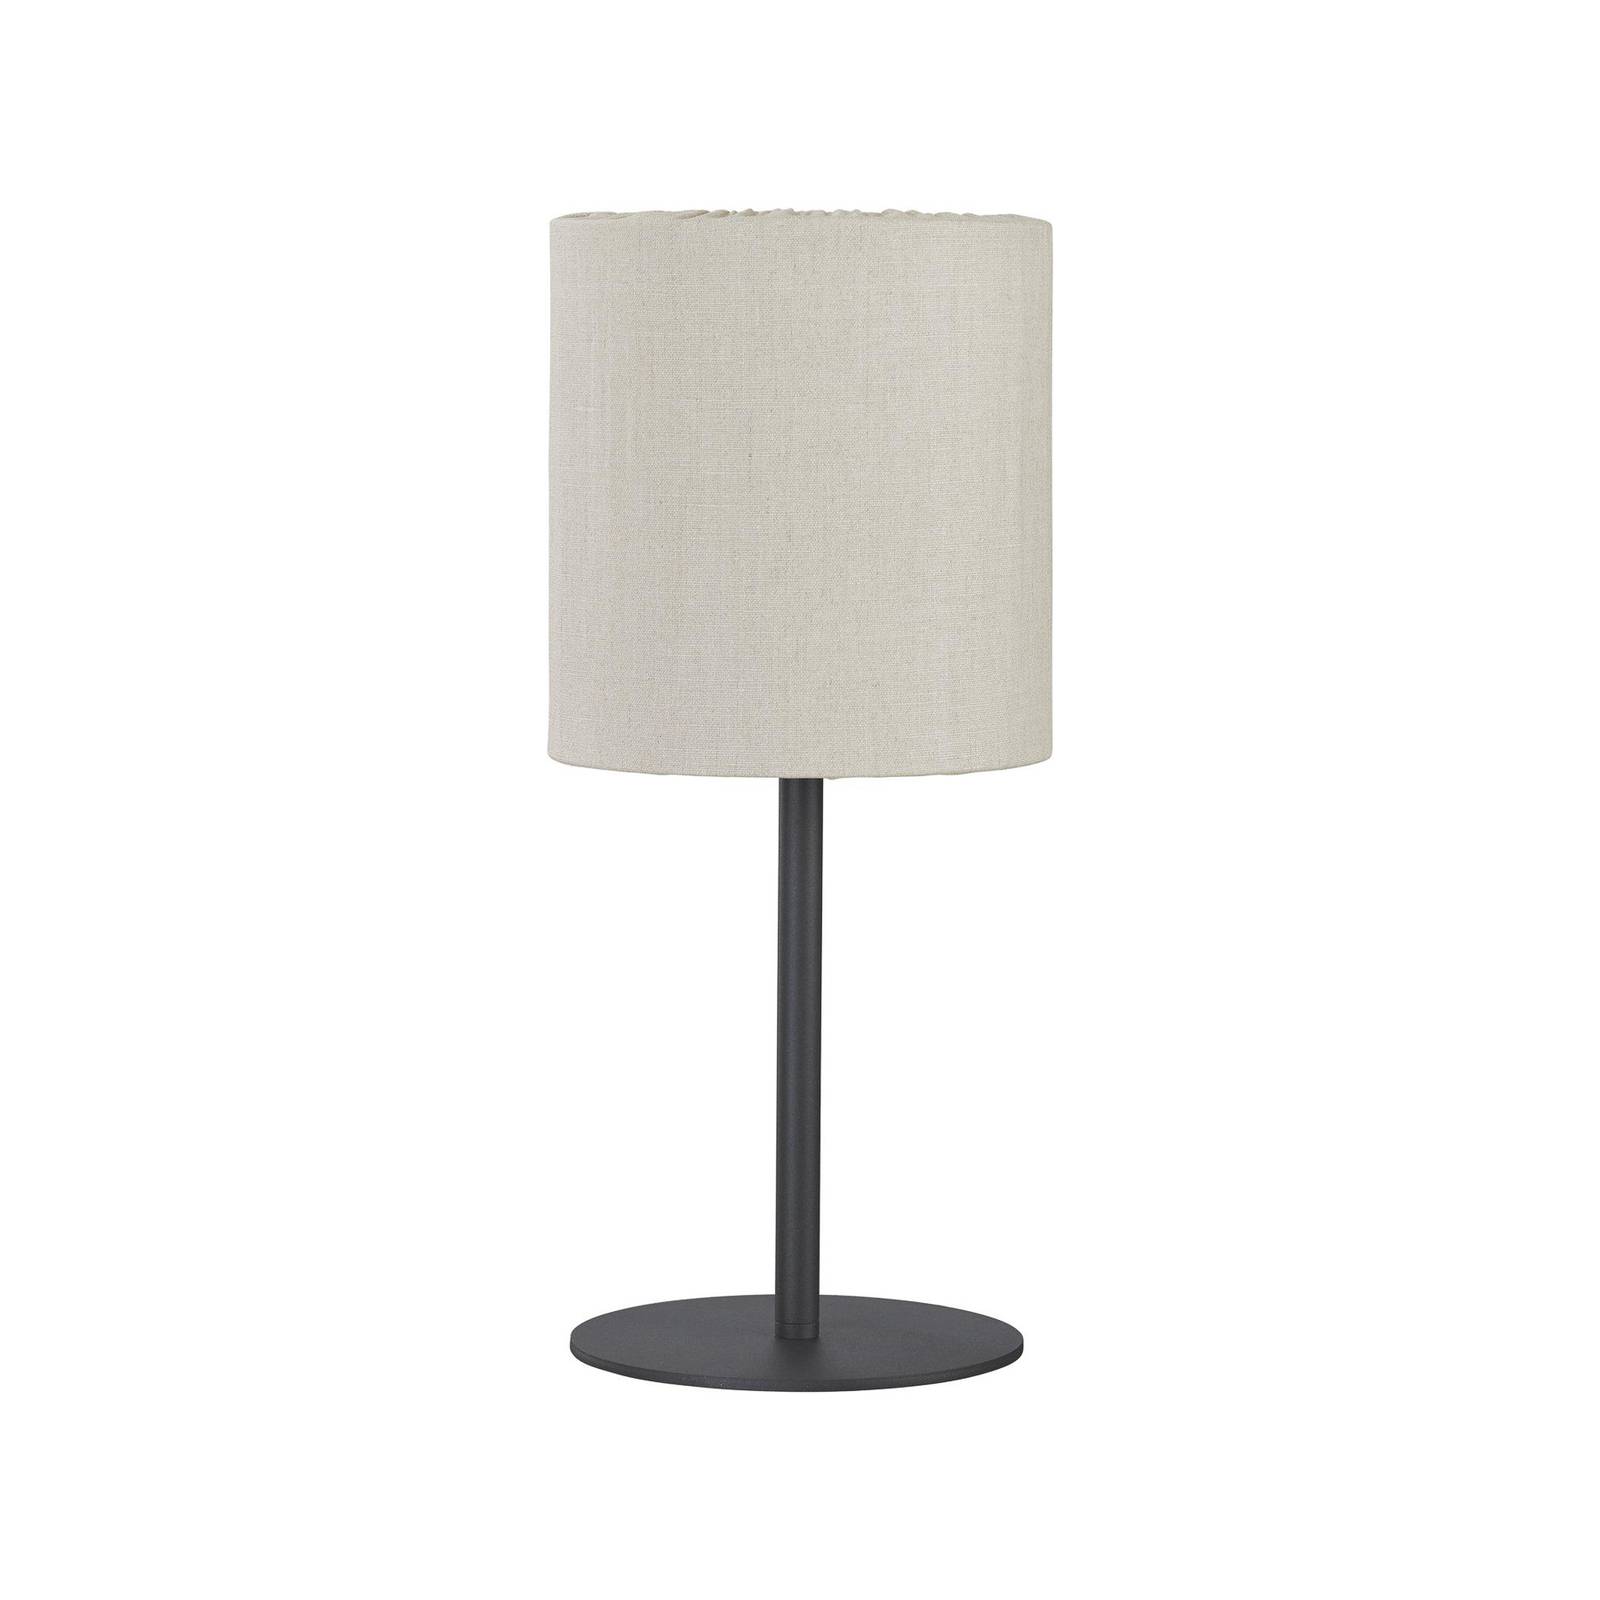 PR Home bordslampa Agnar mörkgrå/beige 57 cm